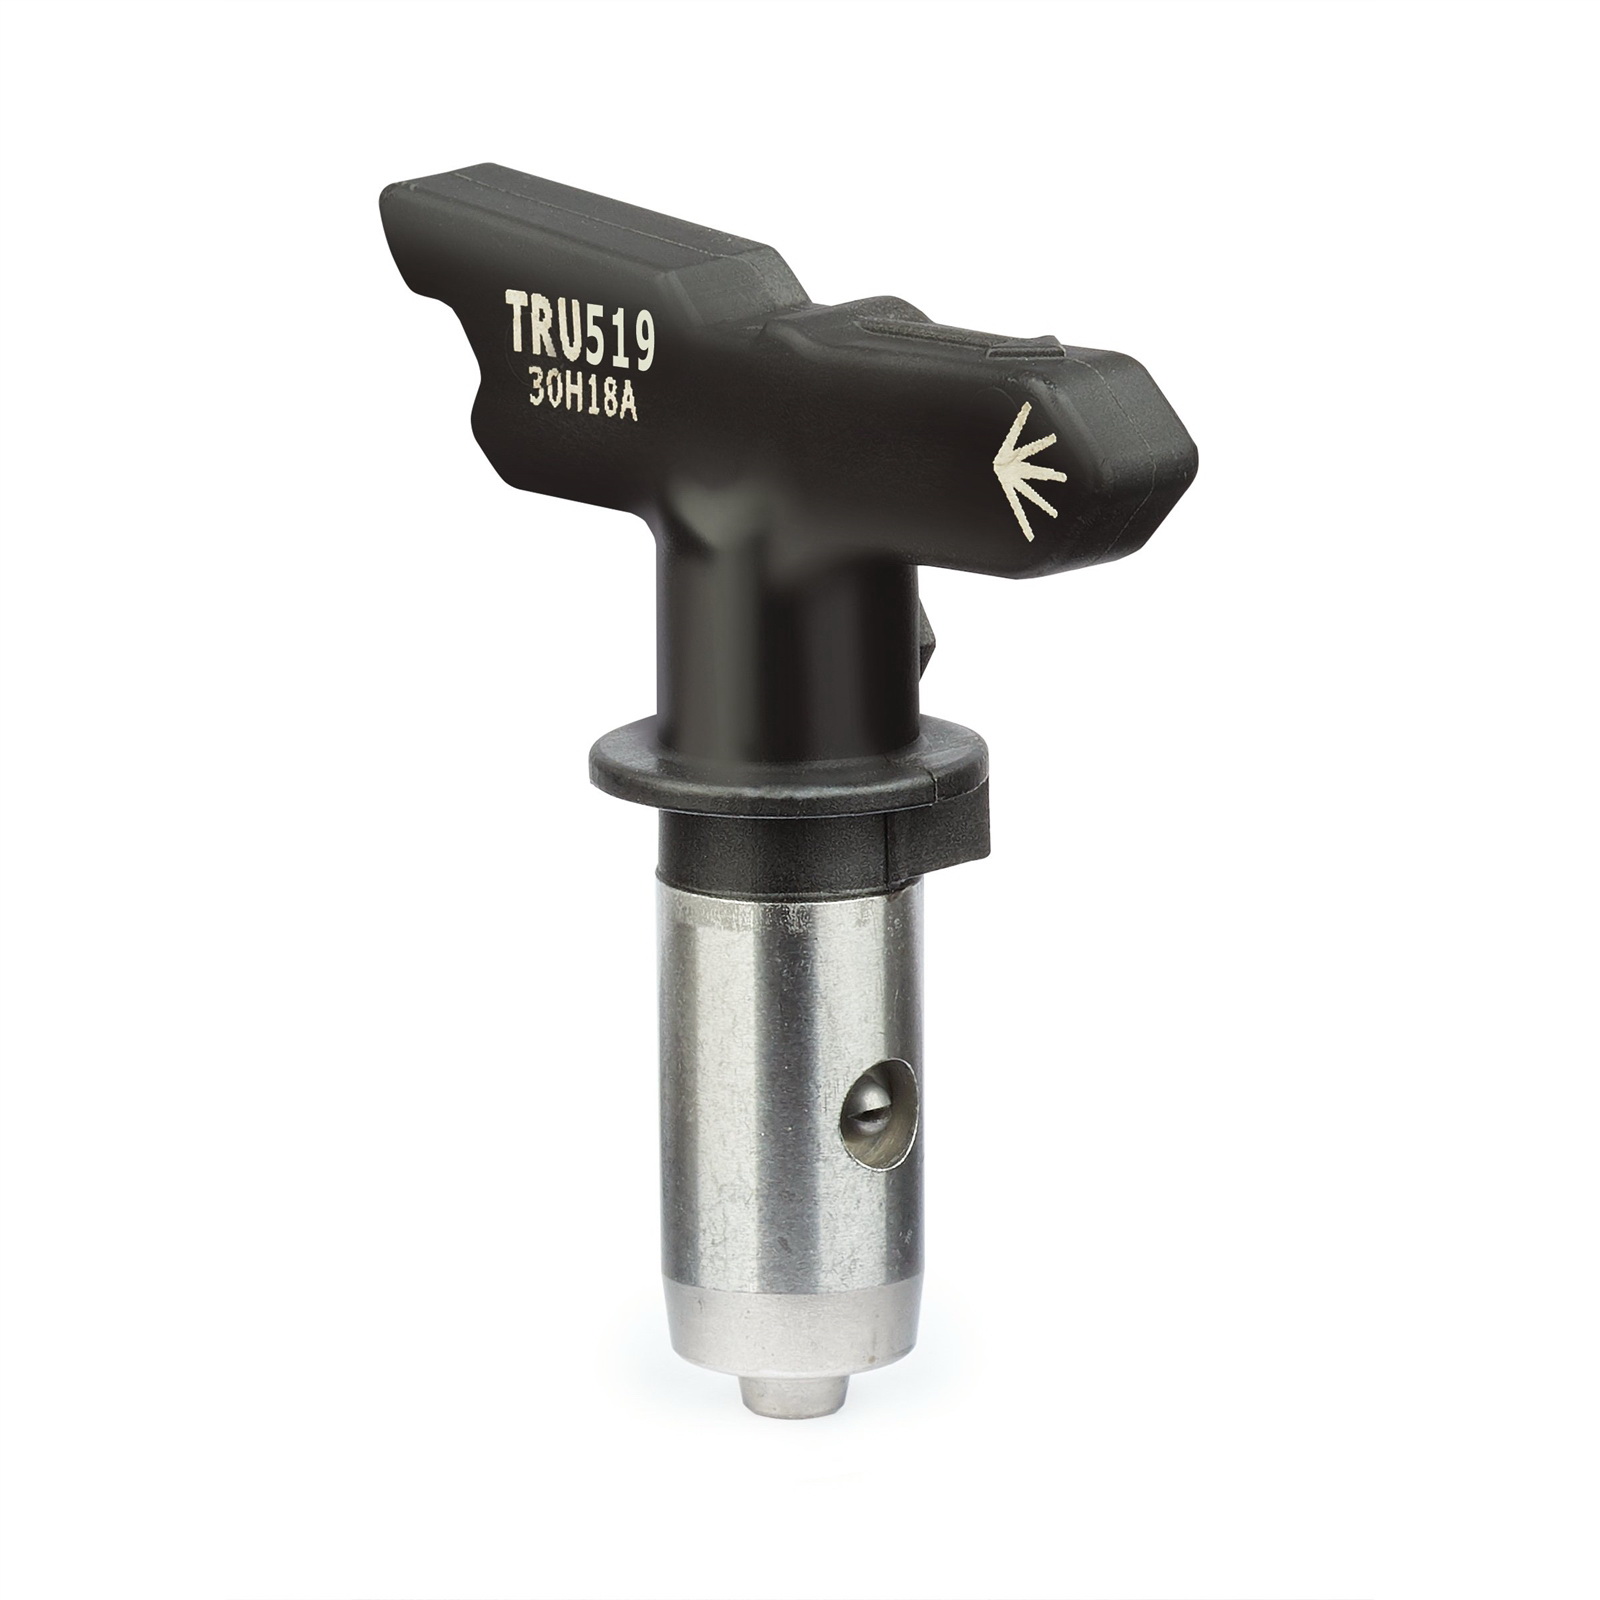 Graco TRU519 Spray Tip, 519 Tip, Carbide Steel - 4